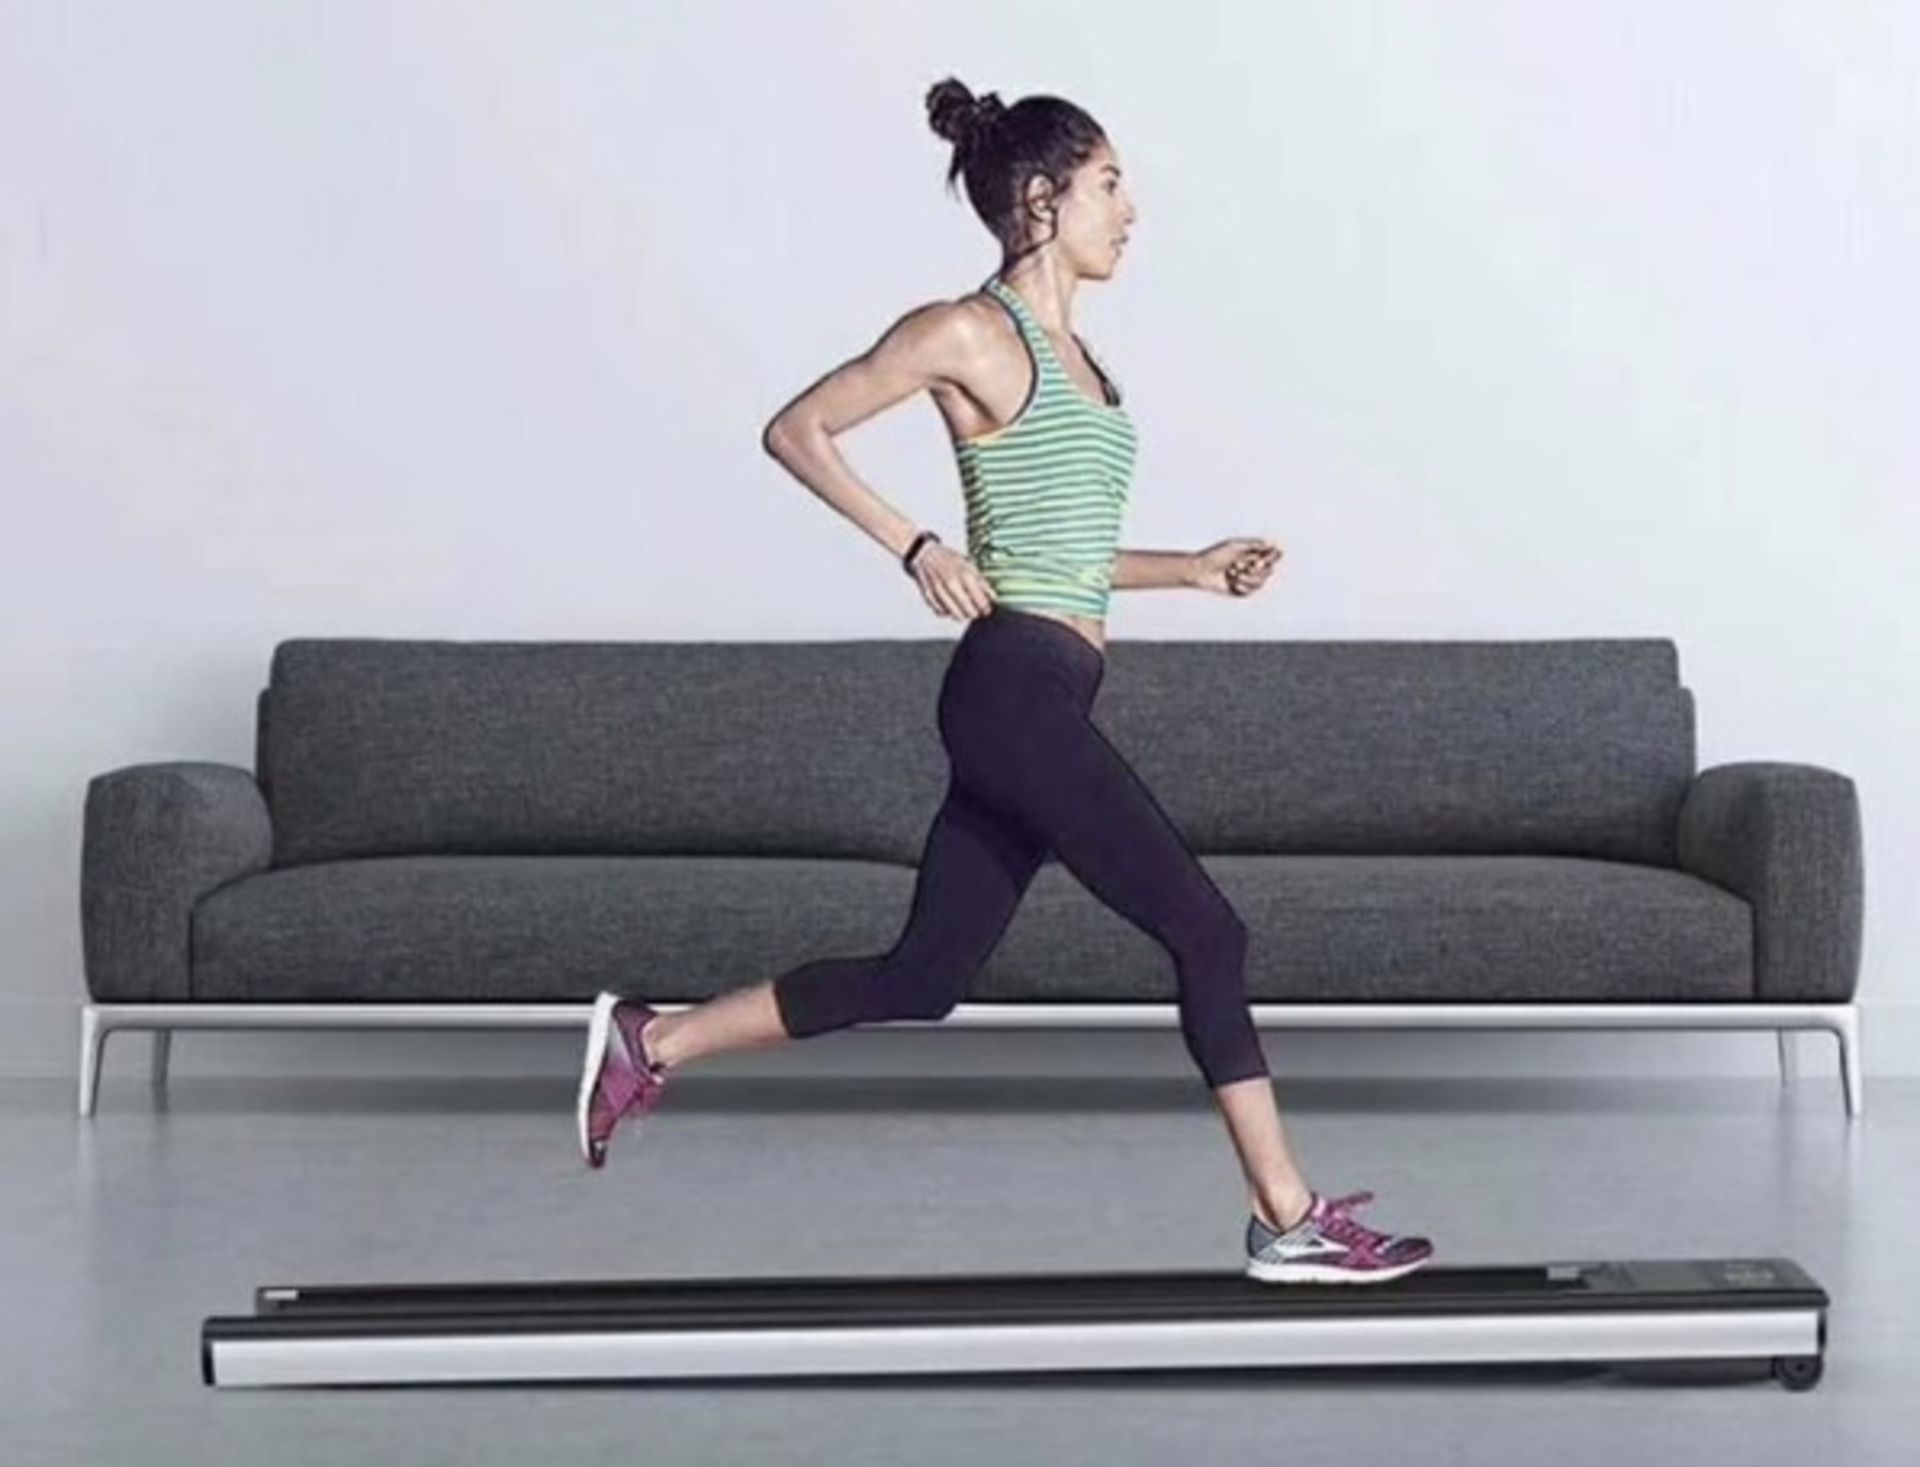 1 x Slim Tread Ultra Thin Smart Treadmill Running / Walking Machine - Lightweight With Folding - Image 15 of 23